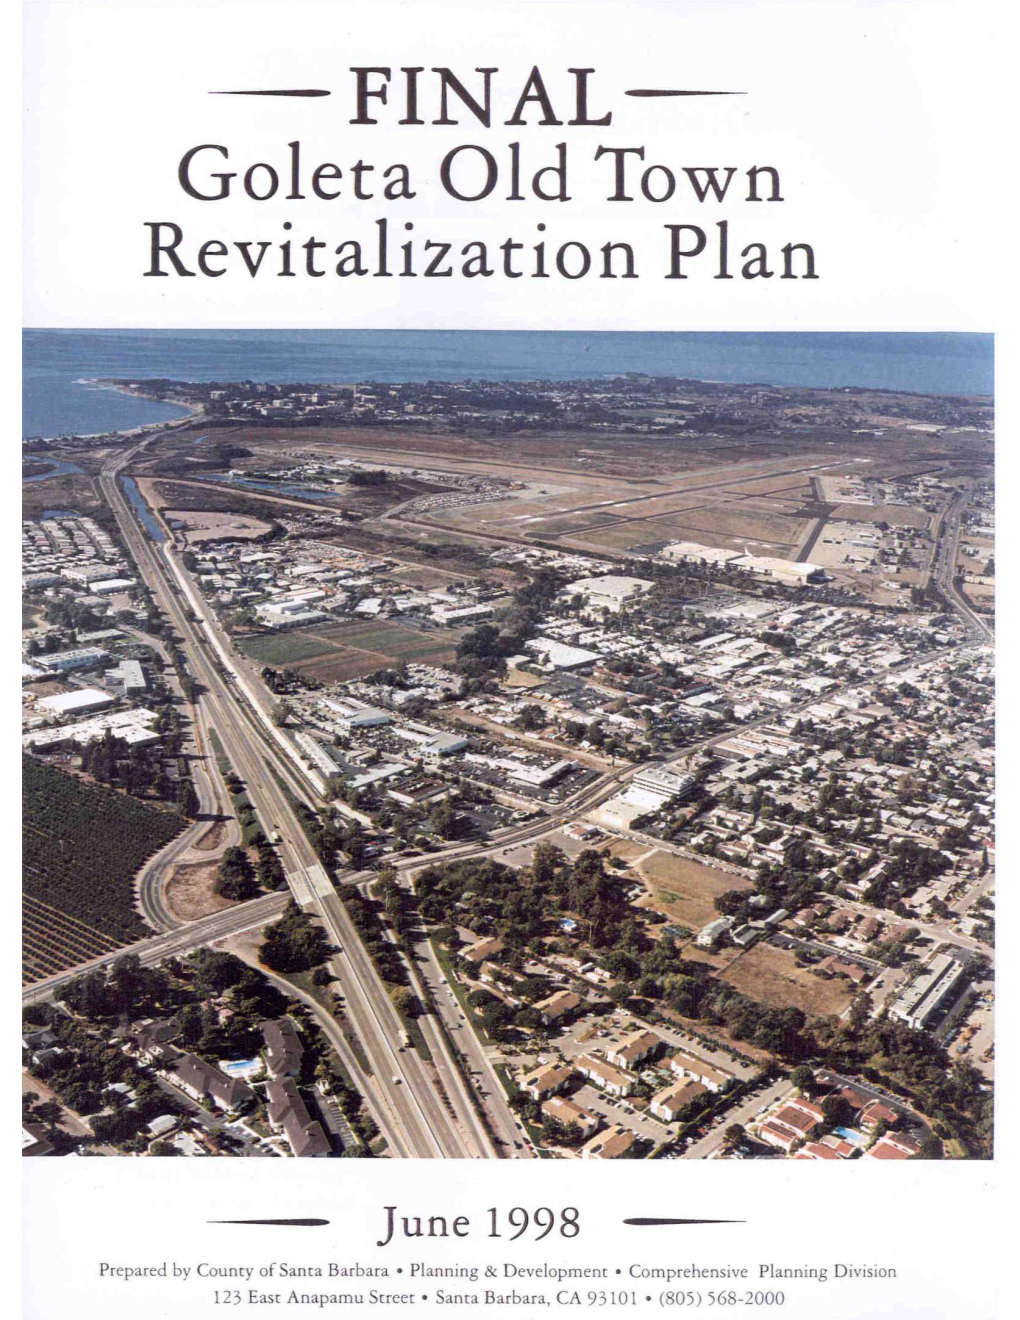 Final Goleta Old Town Revitalization Plan